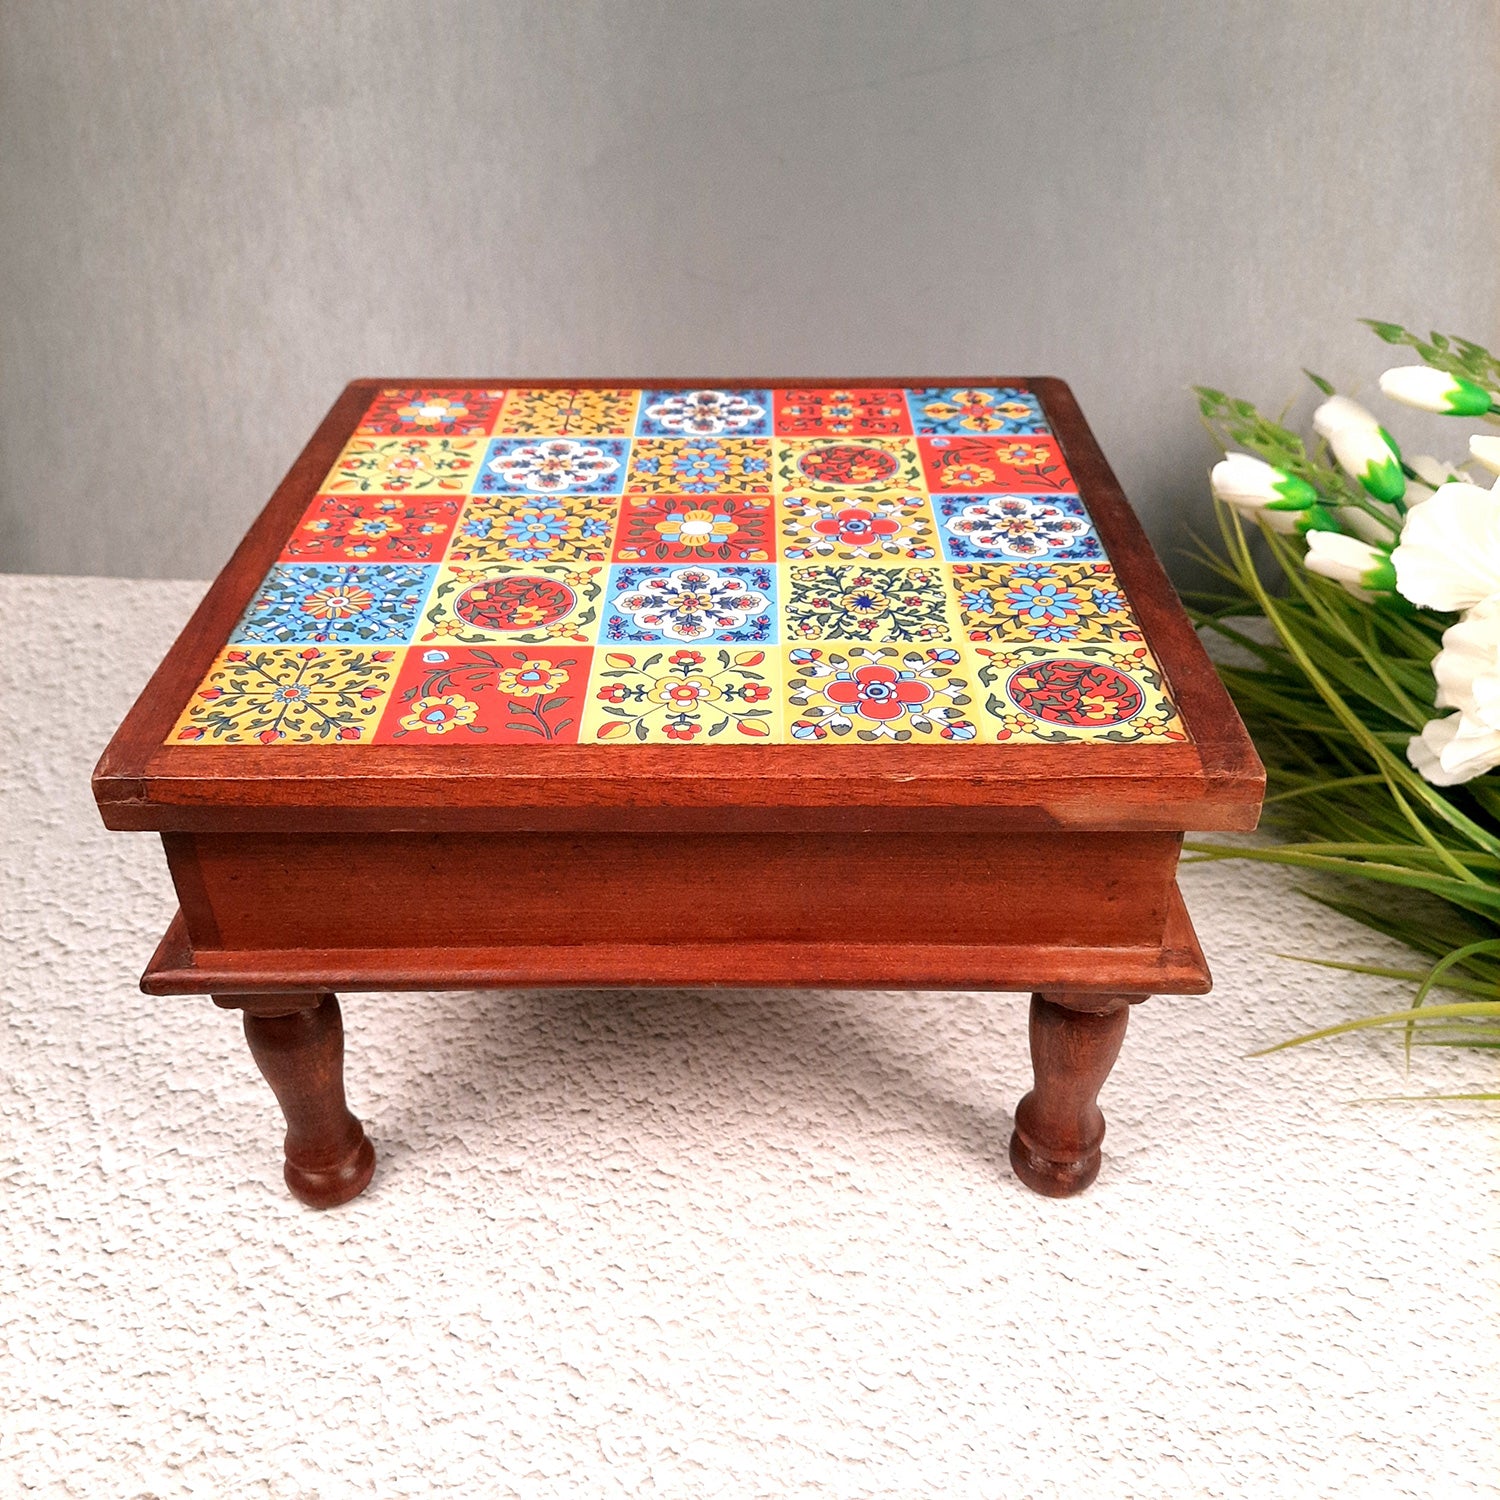 Wooden Puja Chowki Bajot with Ceramic Tile Top | Chauki for Sitting - for Pooja, Weddings, Home Decor, Corner Decor & Festivals - 11 Inch - Apkamart